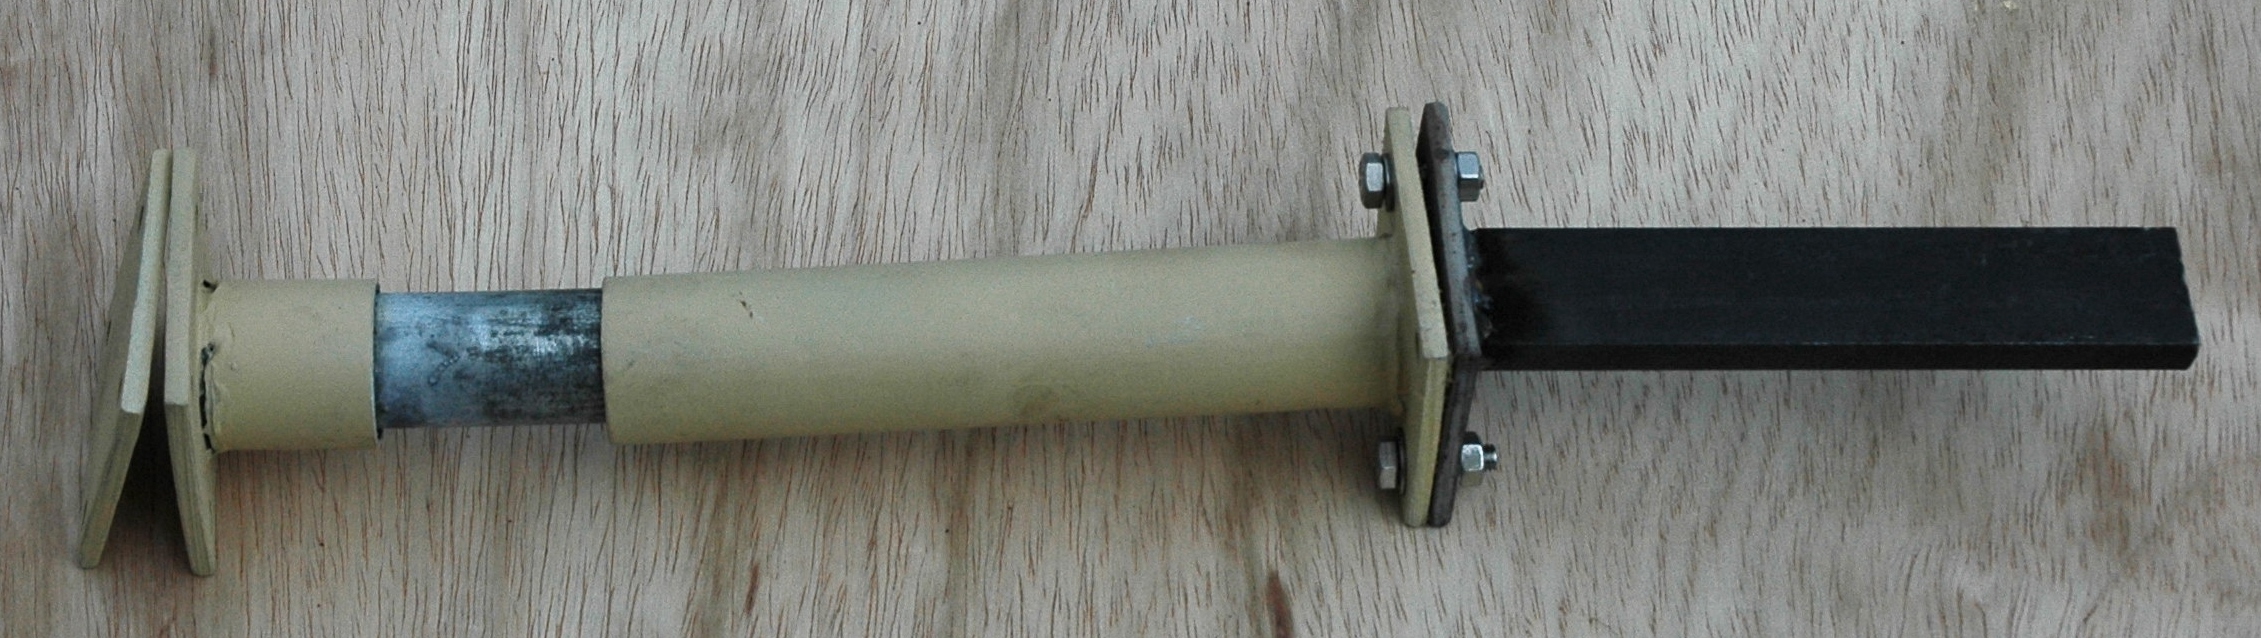 8.8 cm Raketenwerfer 43 Dsc9495